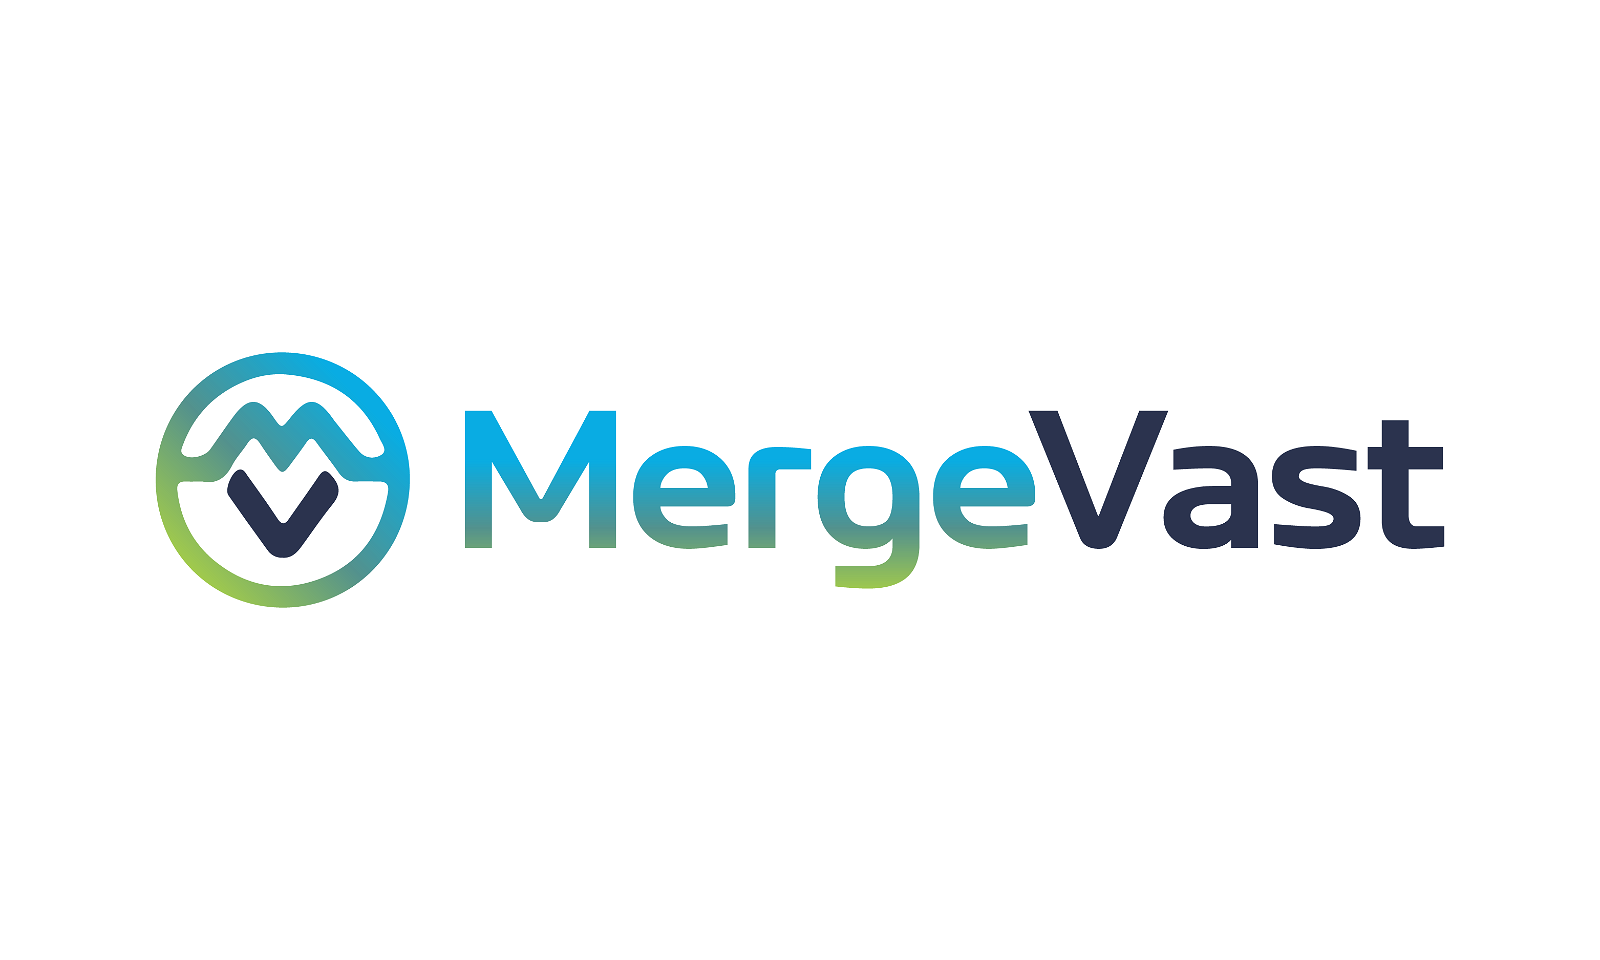 MergeVast.com - Creative brandable domain for sale